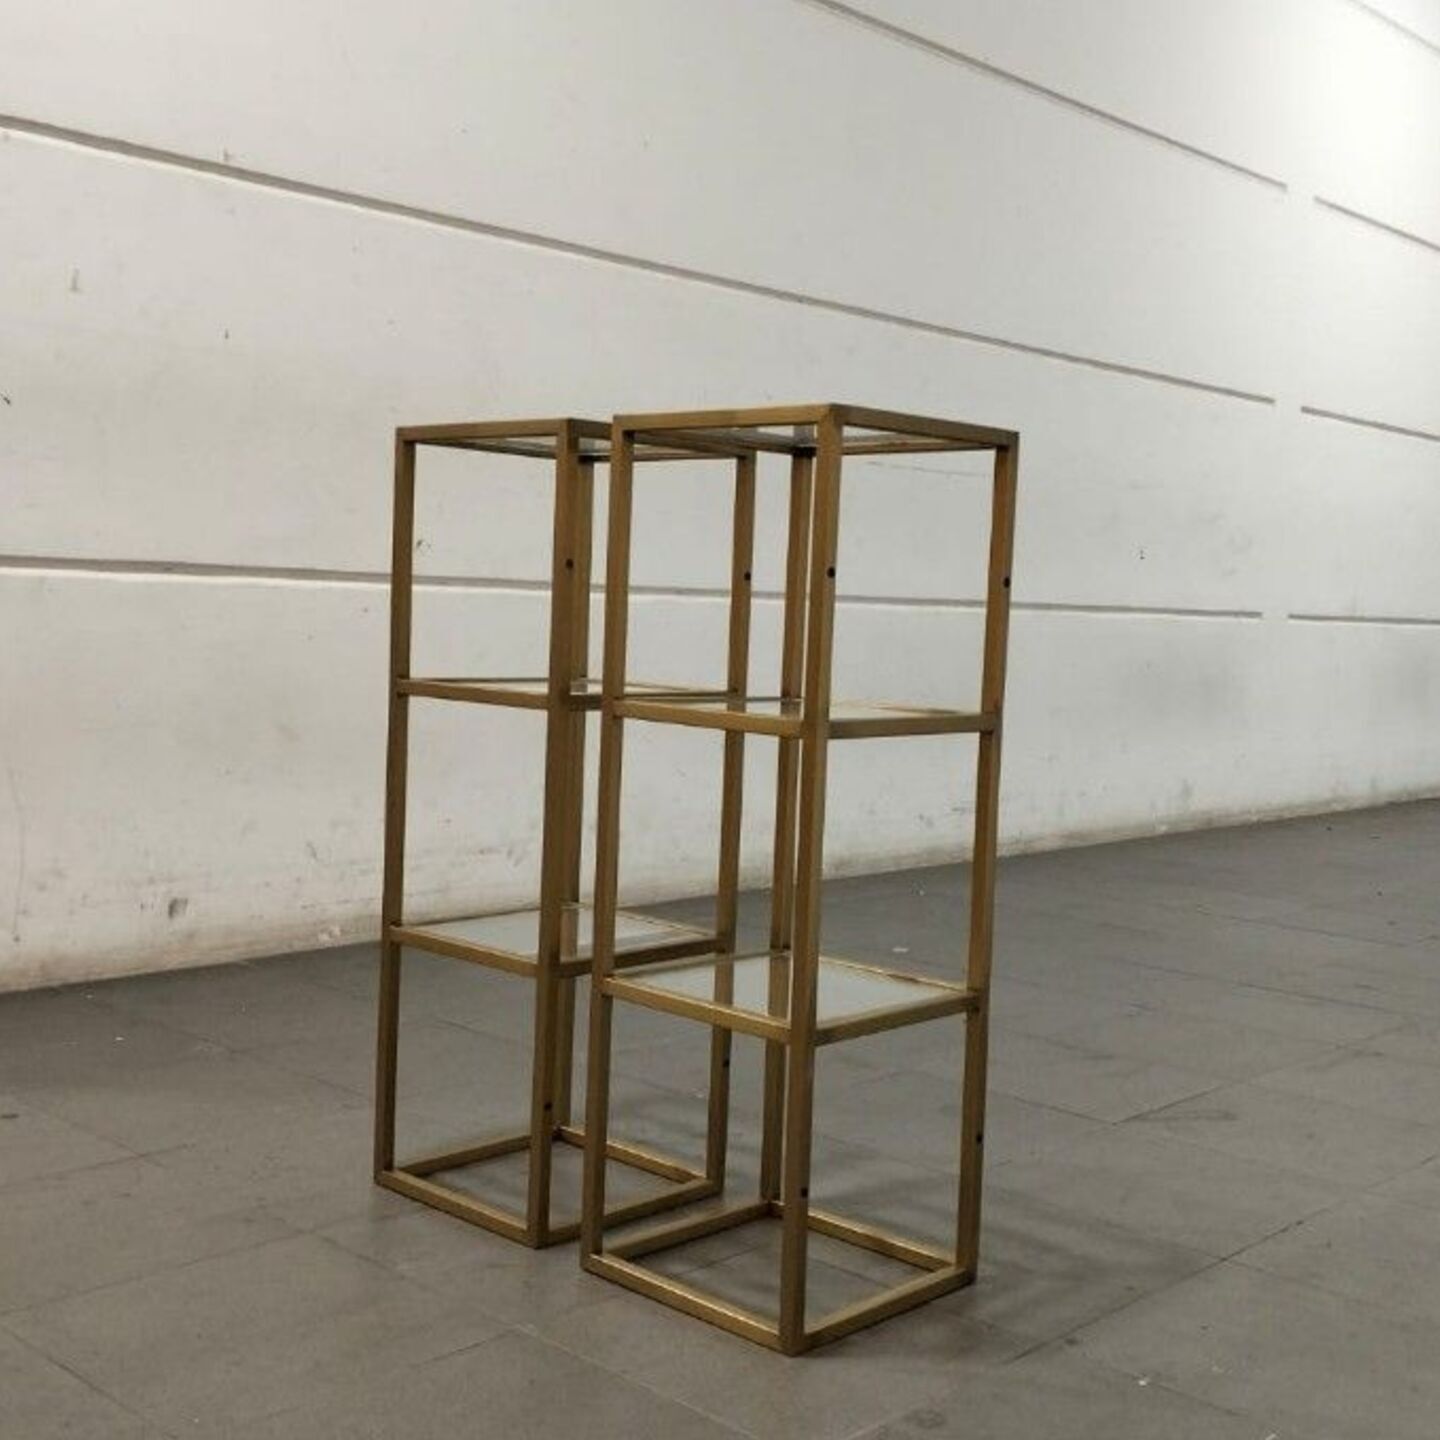 NADINE Minimalist Gold Framed Wall Display Shelf (set of 2)